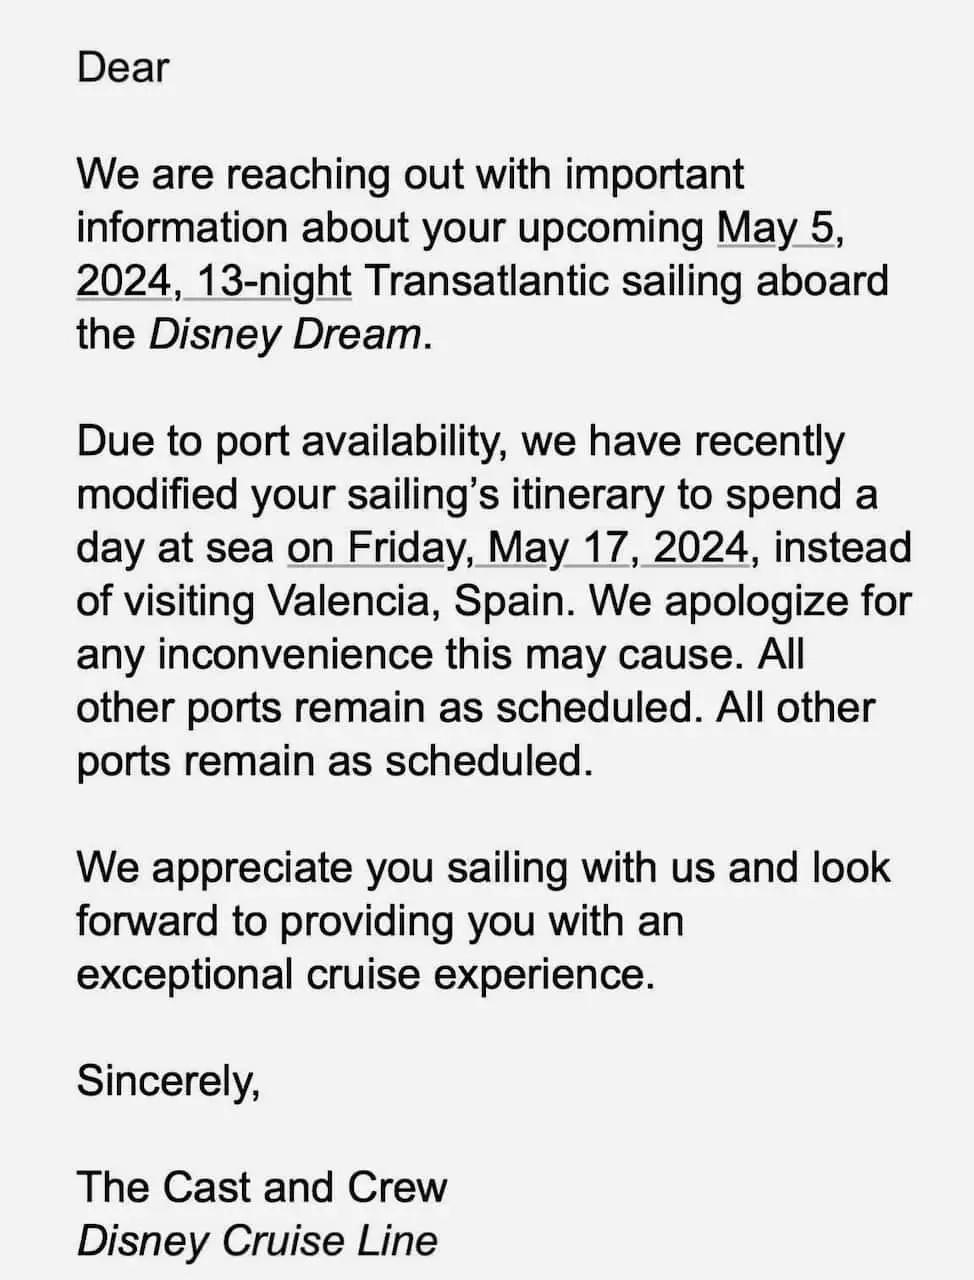 Itinerary Change Disney Dream Eastbound Transatlantic 2024 The Disney